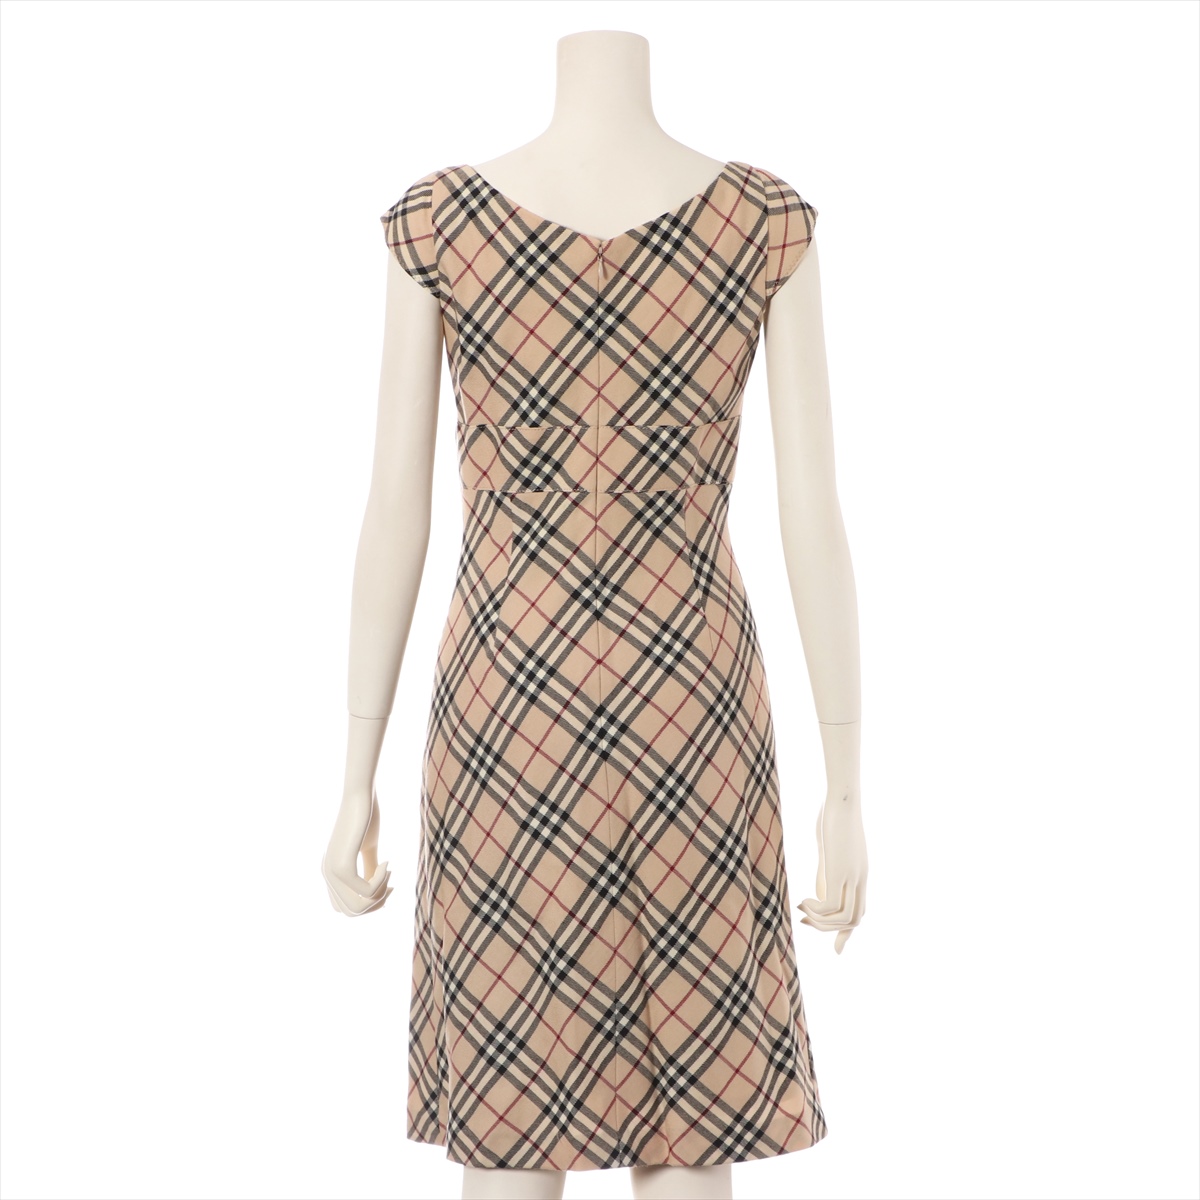 Burberry Blue Label Wool x Polyester Knit Dress 36 Ladies Beige | eBay